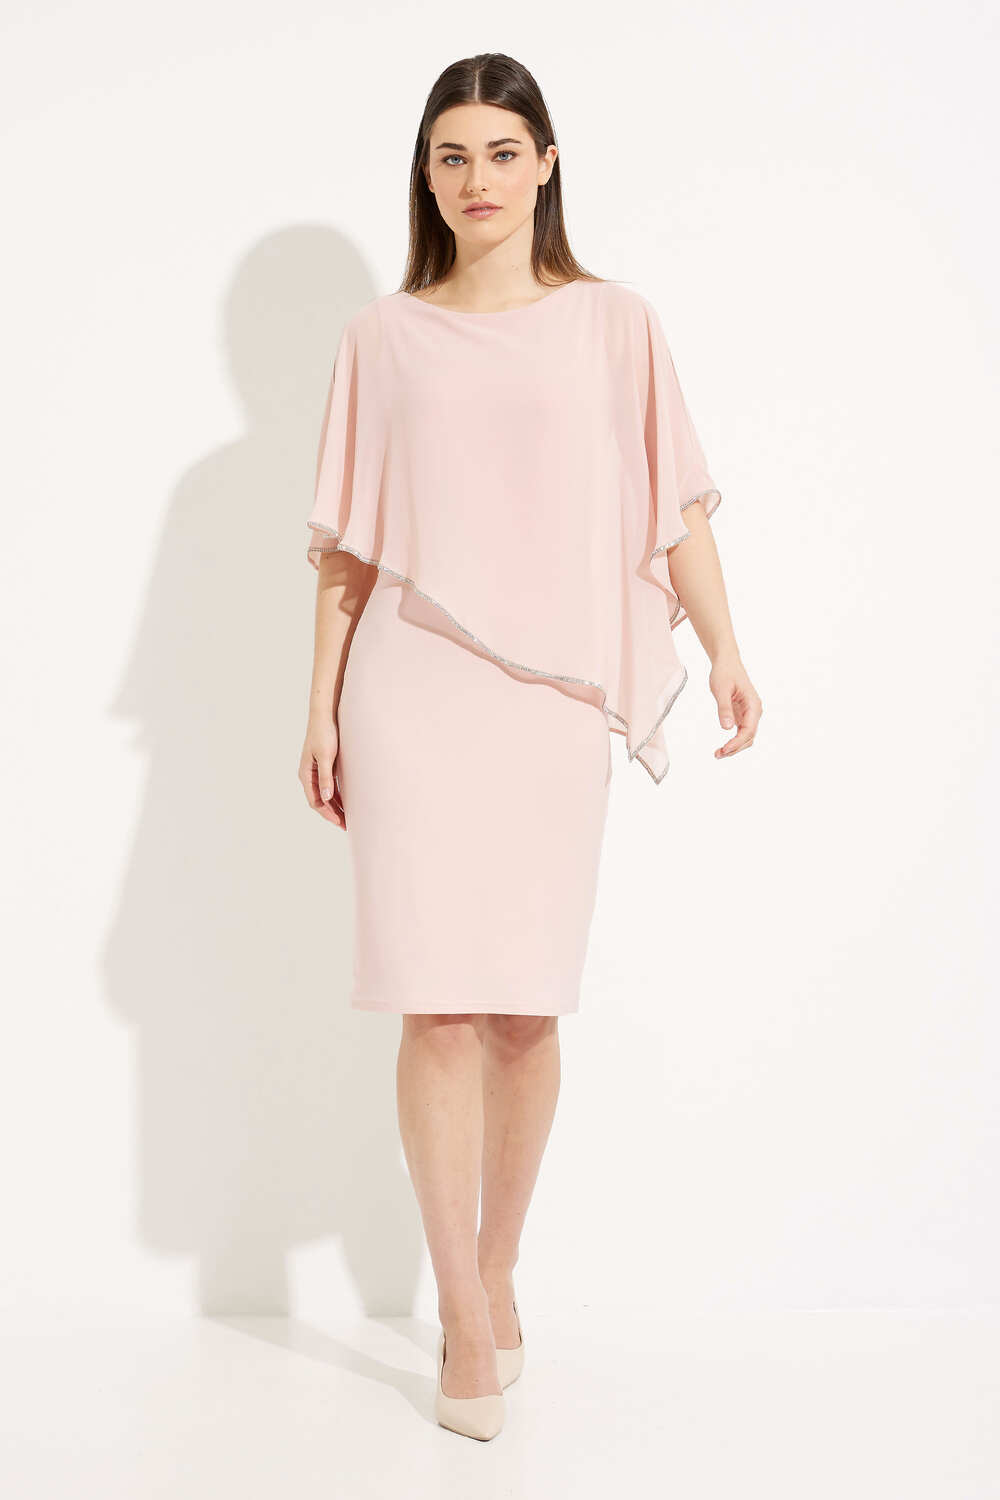 Dress with Asymmetric Hem Style 223762. Rose